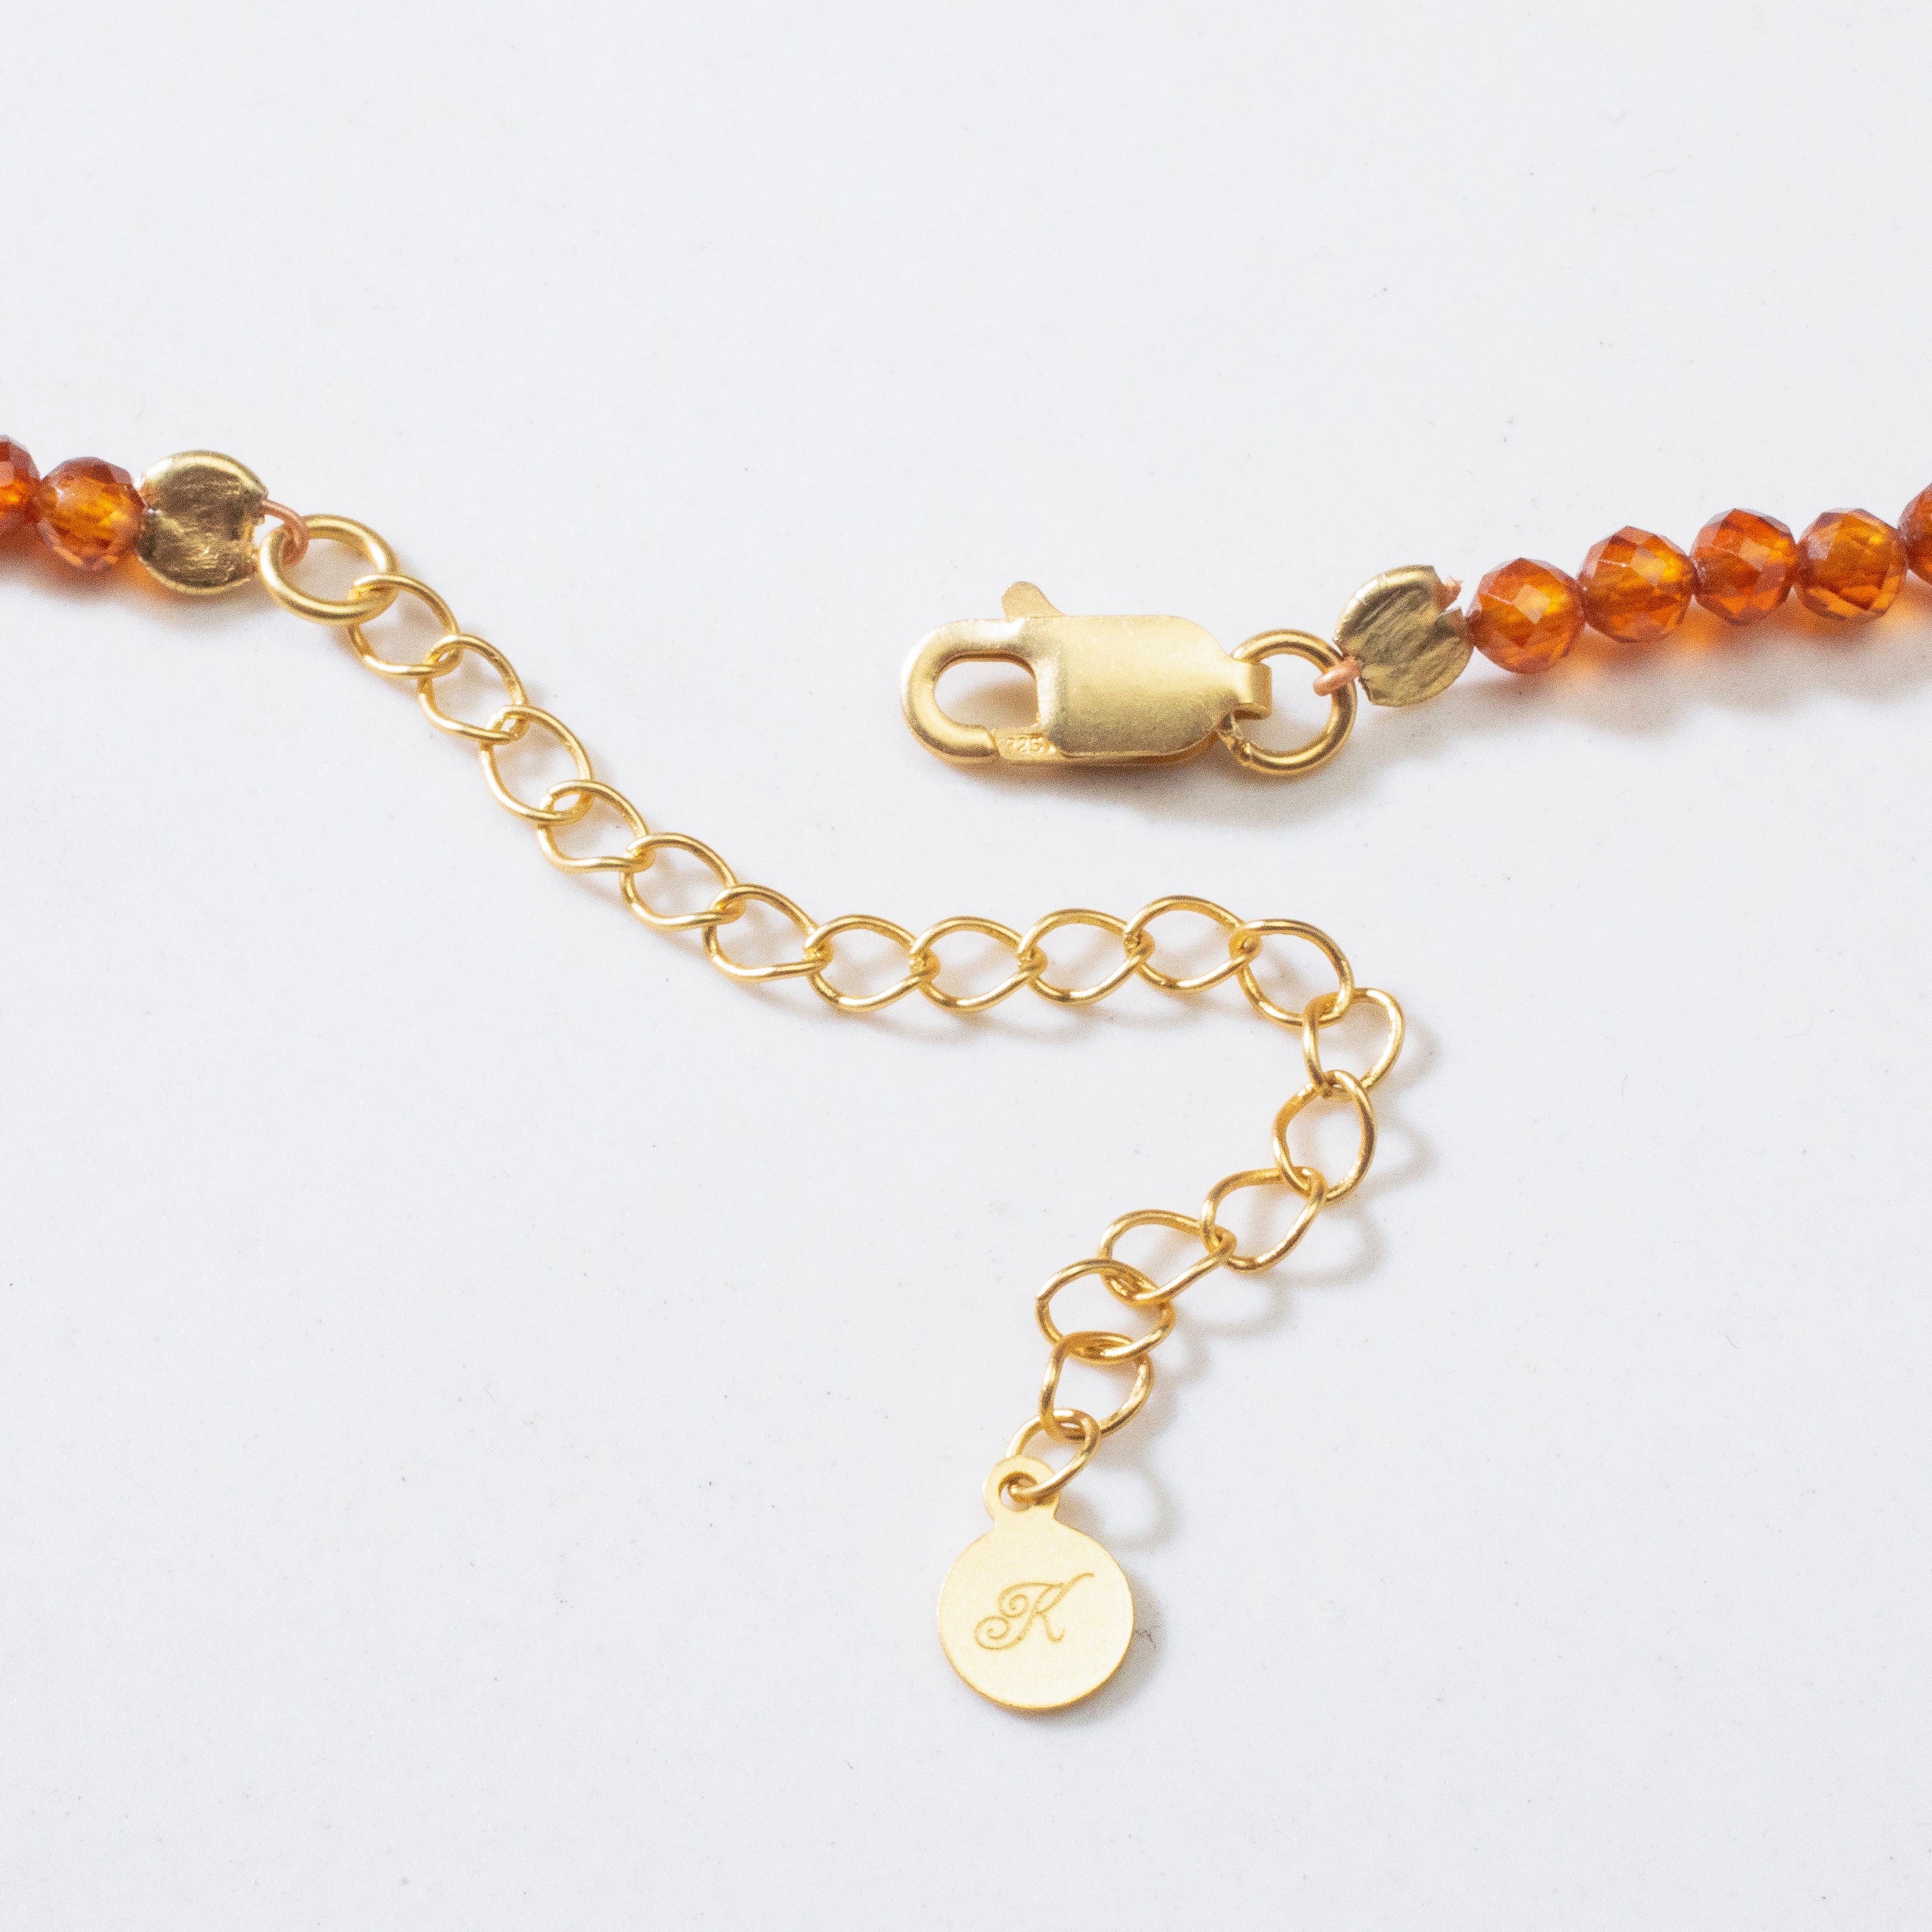 KALIFANO Gemstone Jewelry 3mm Orange Garnet Faceted 31" Necklace / Multi Wrap Bracelet N3-79G-OG